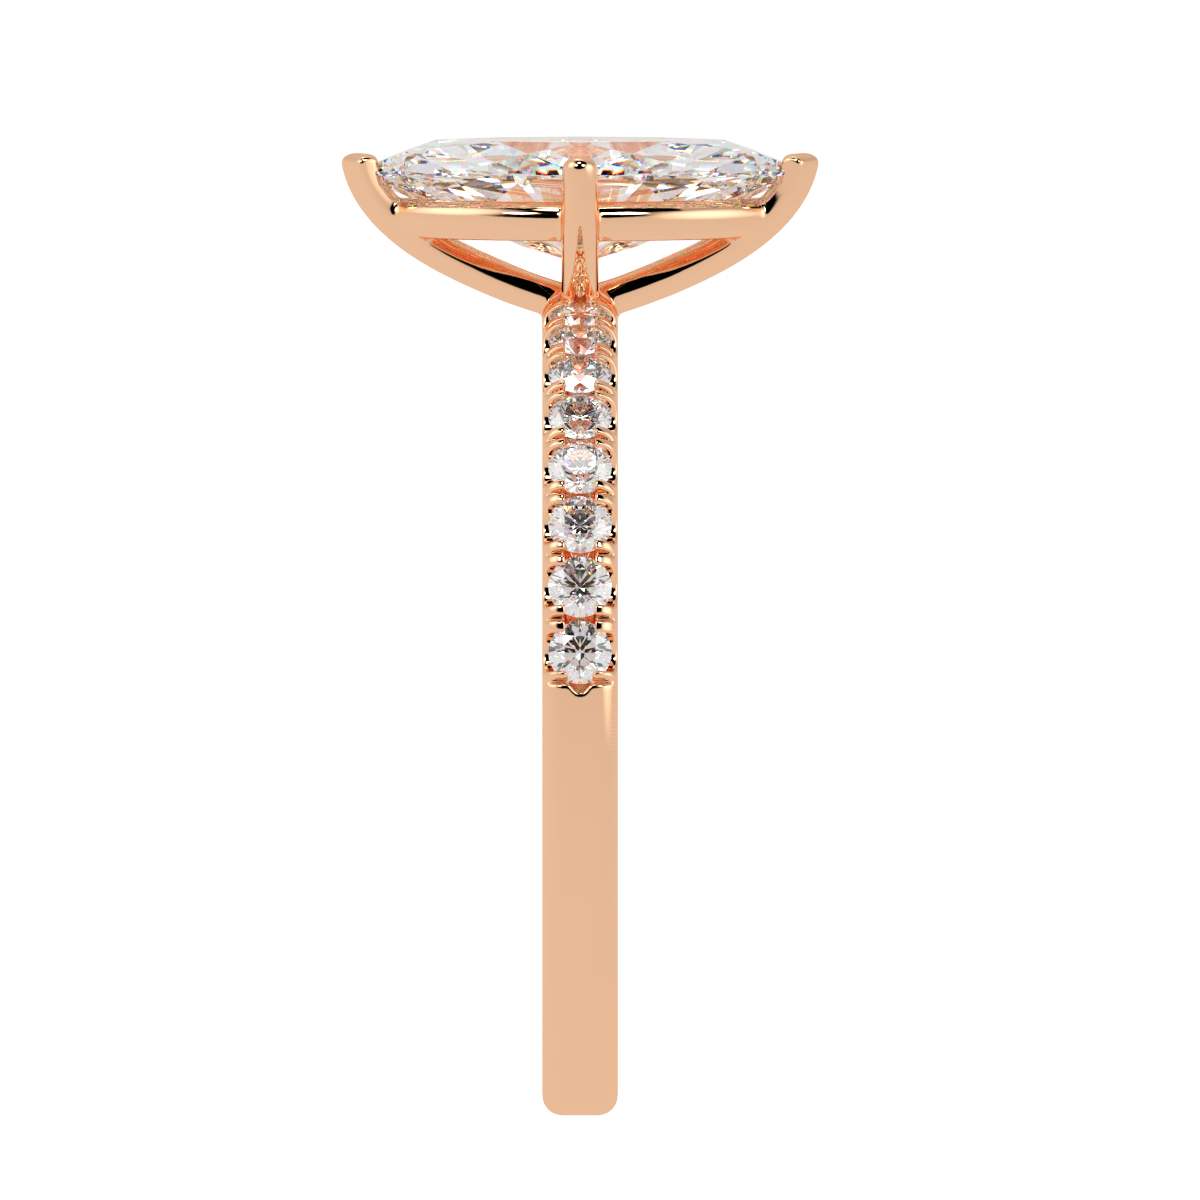 Modern Marquise Diamond Shoulder Ring